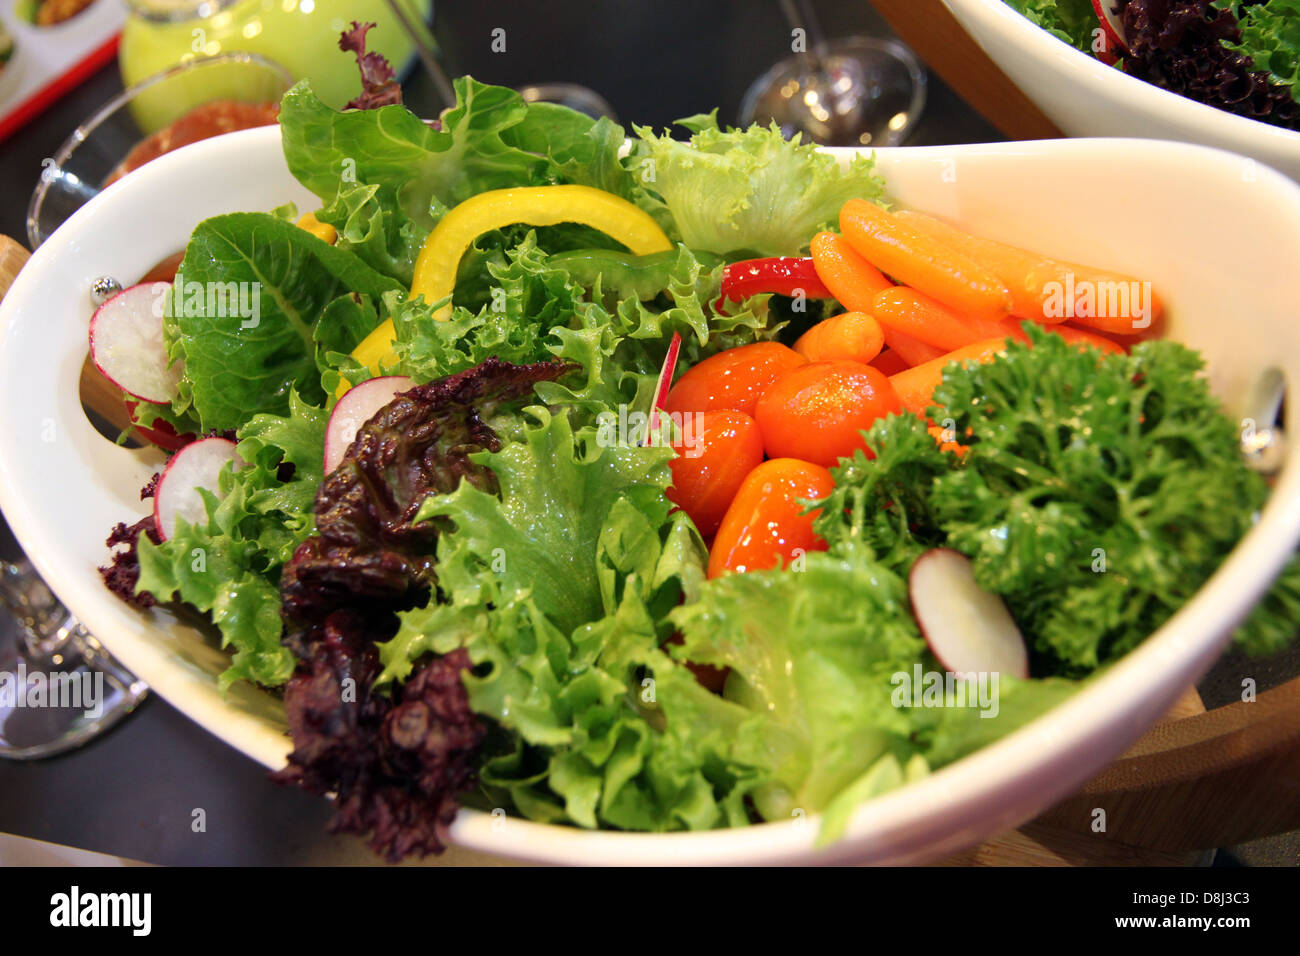 The Salad put take it on dish. Stock Photo